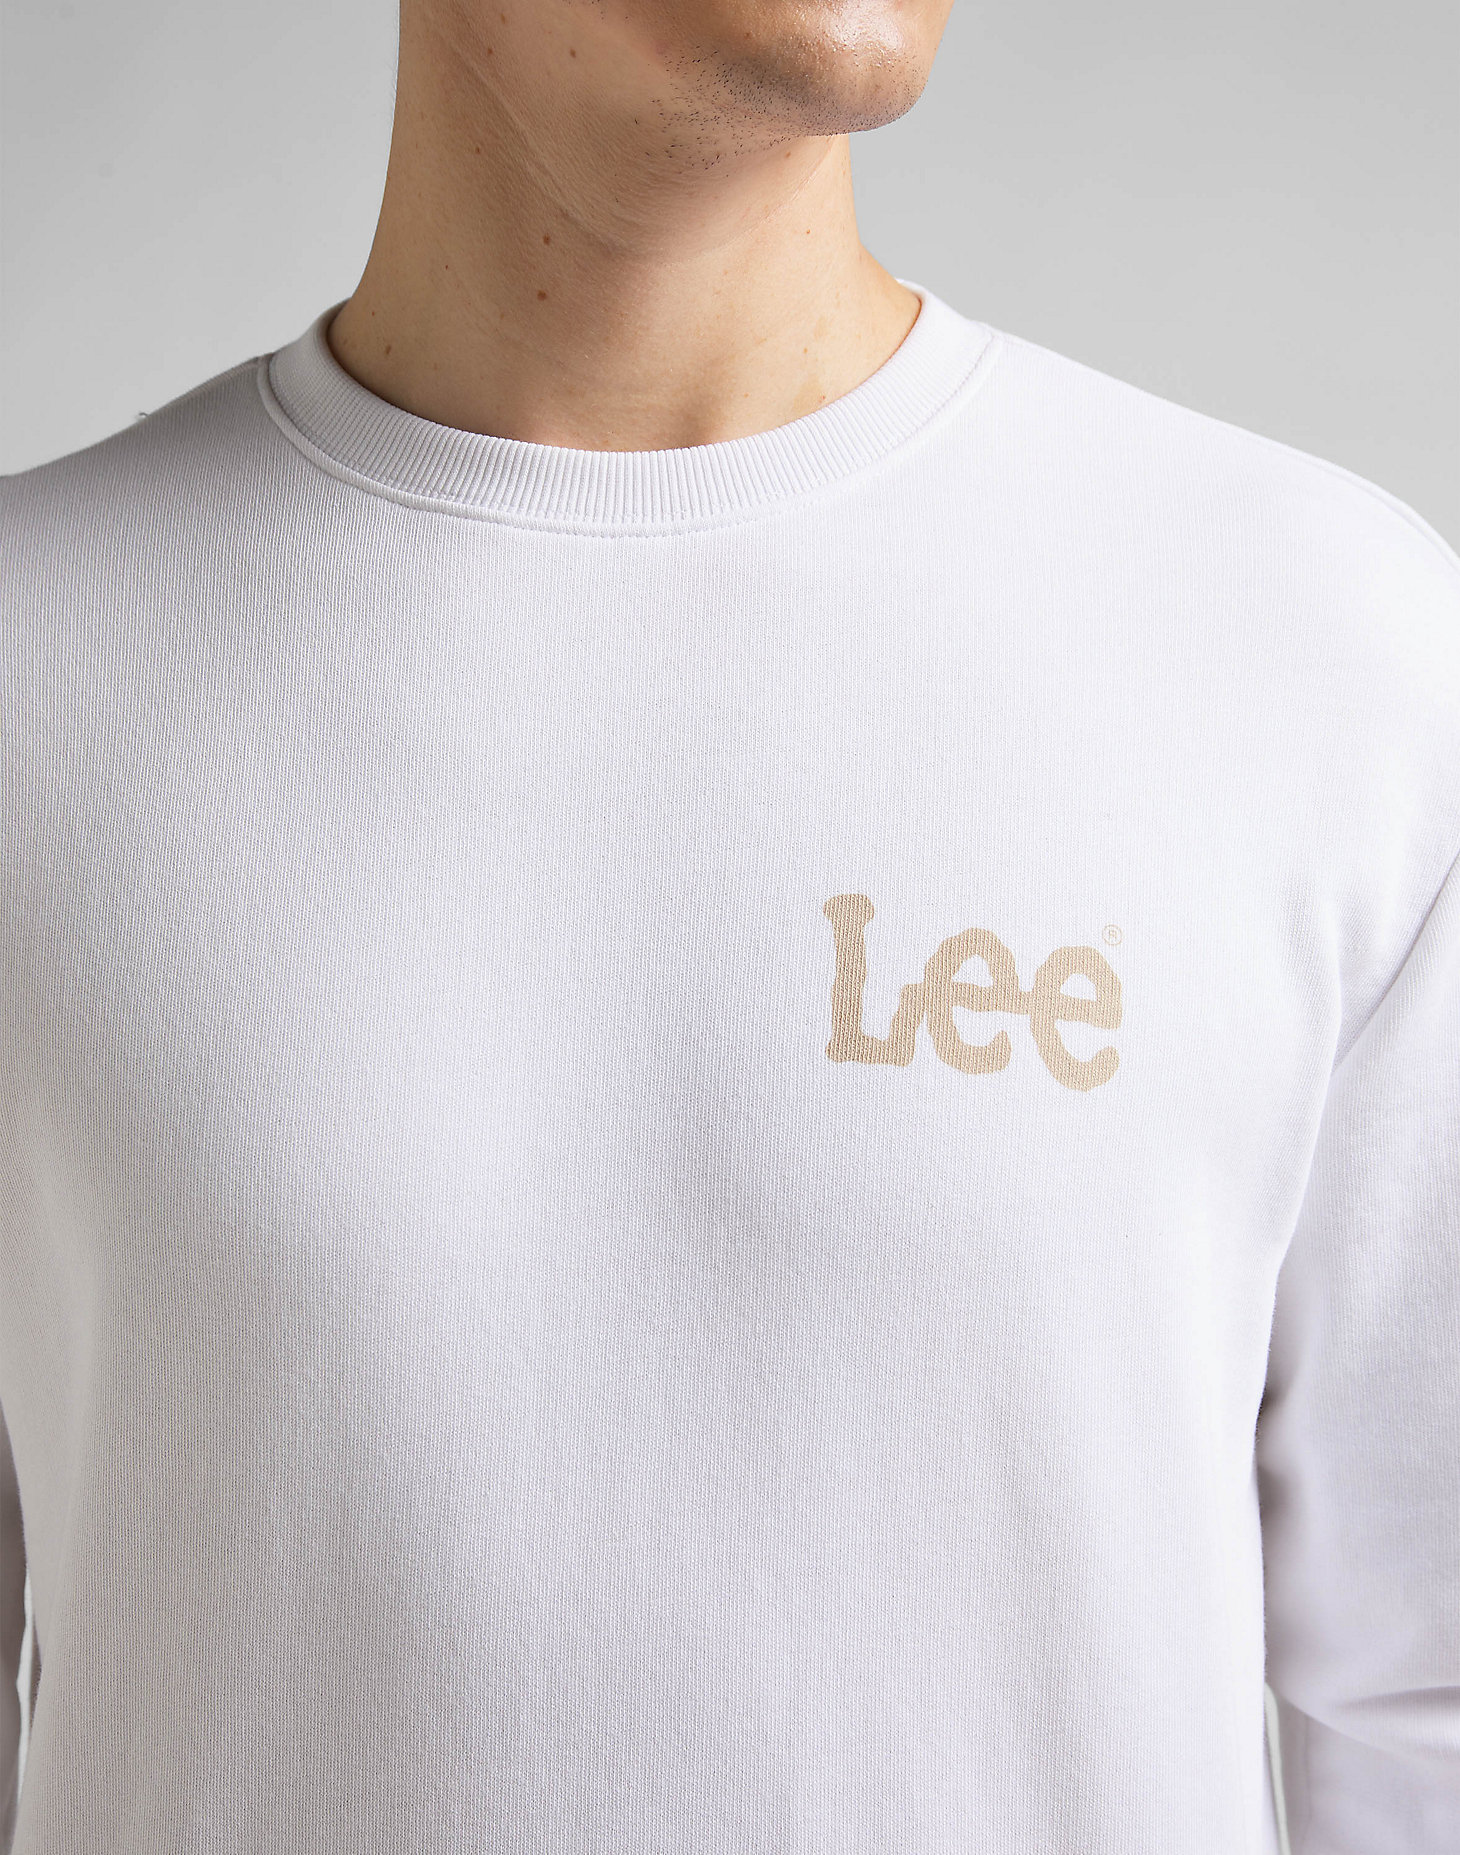 Wobbly Lee Sweatshirt in Bright White alternative view 4